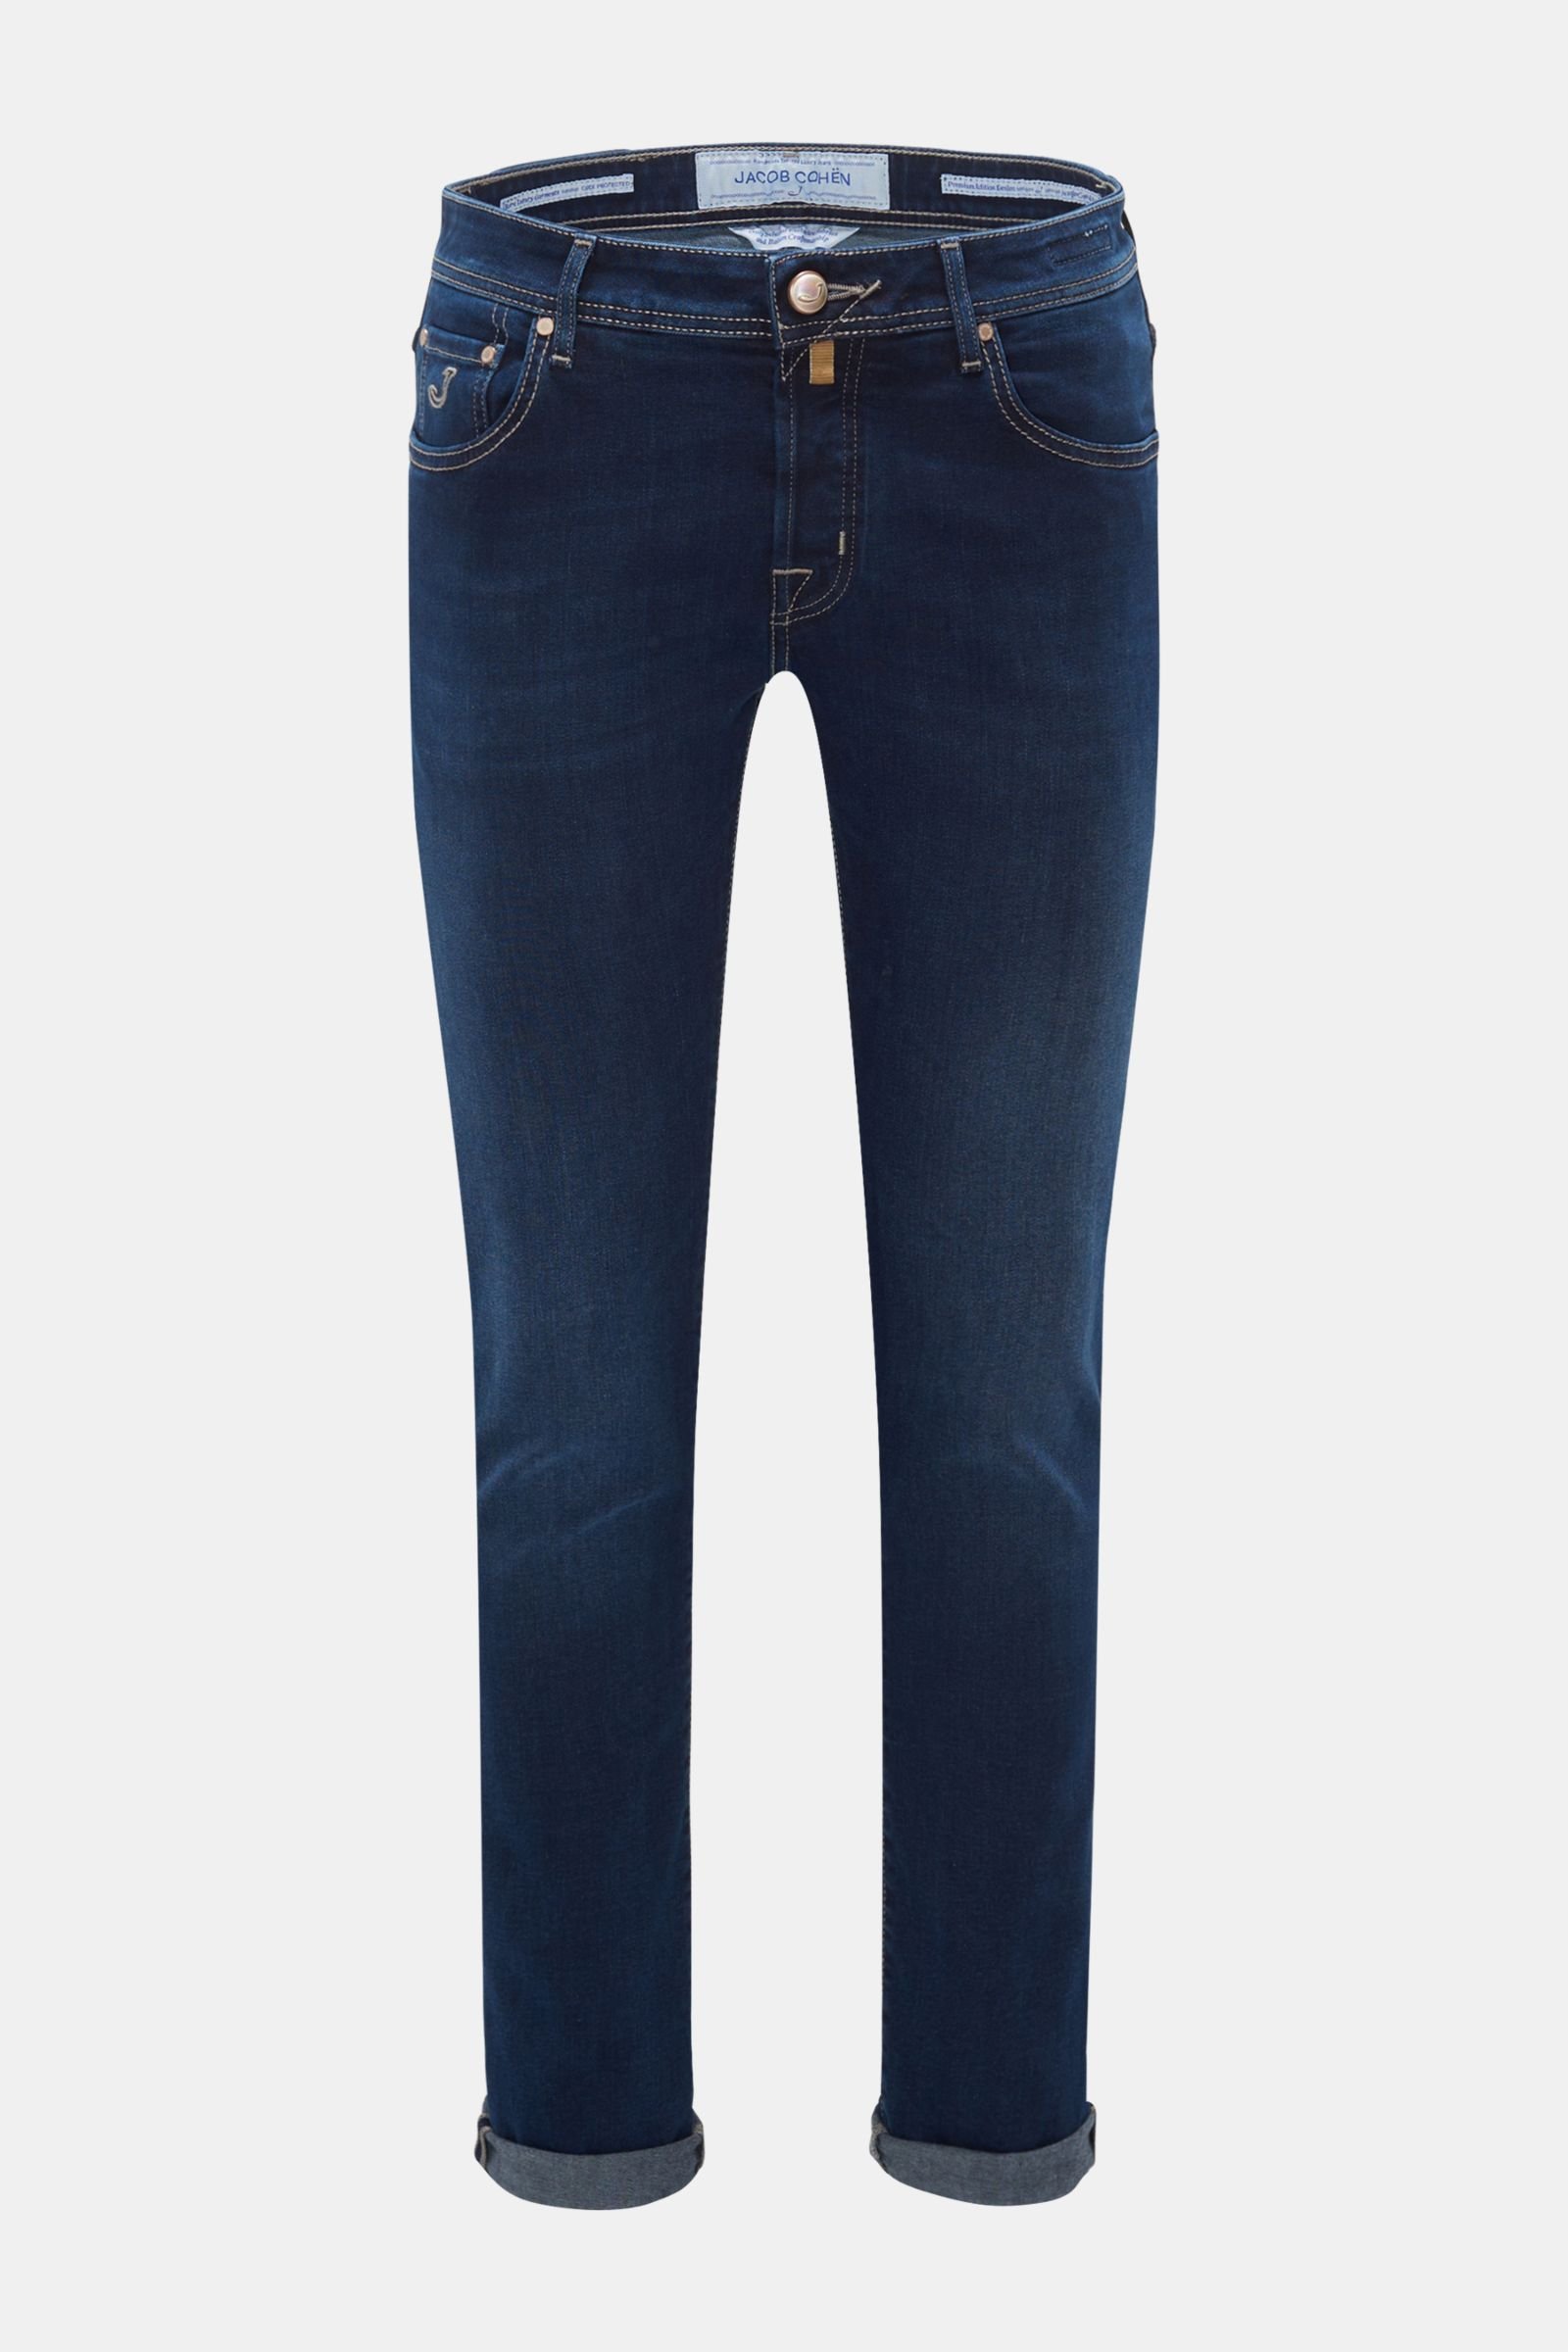 Jeans 'J622 Comfort Slim Fit' dunkelblau